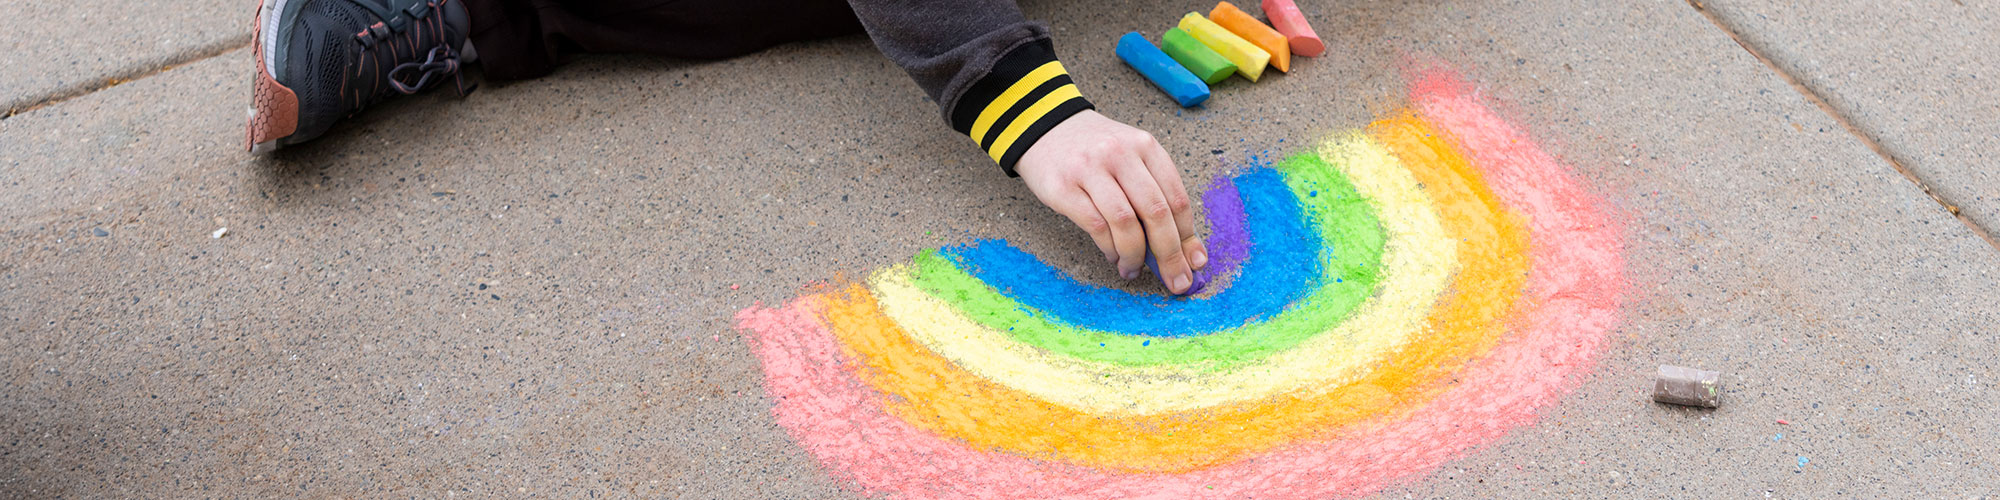 close up of a hand drawing a chalk rainbow on a sidewalk